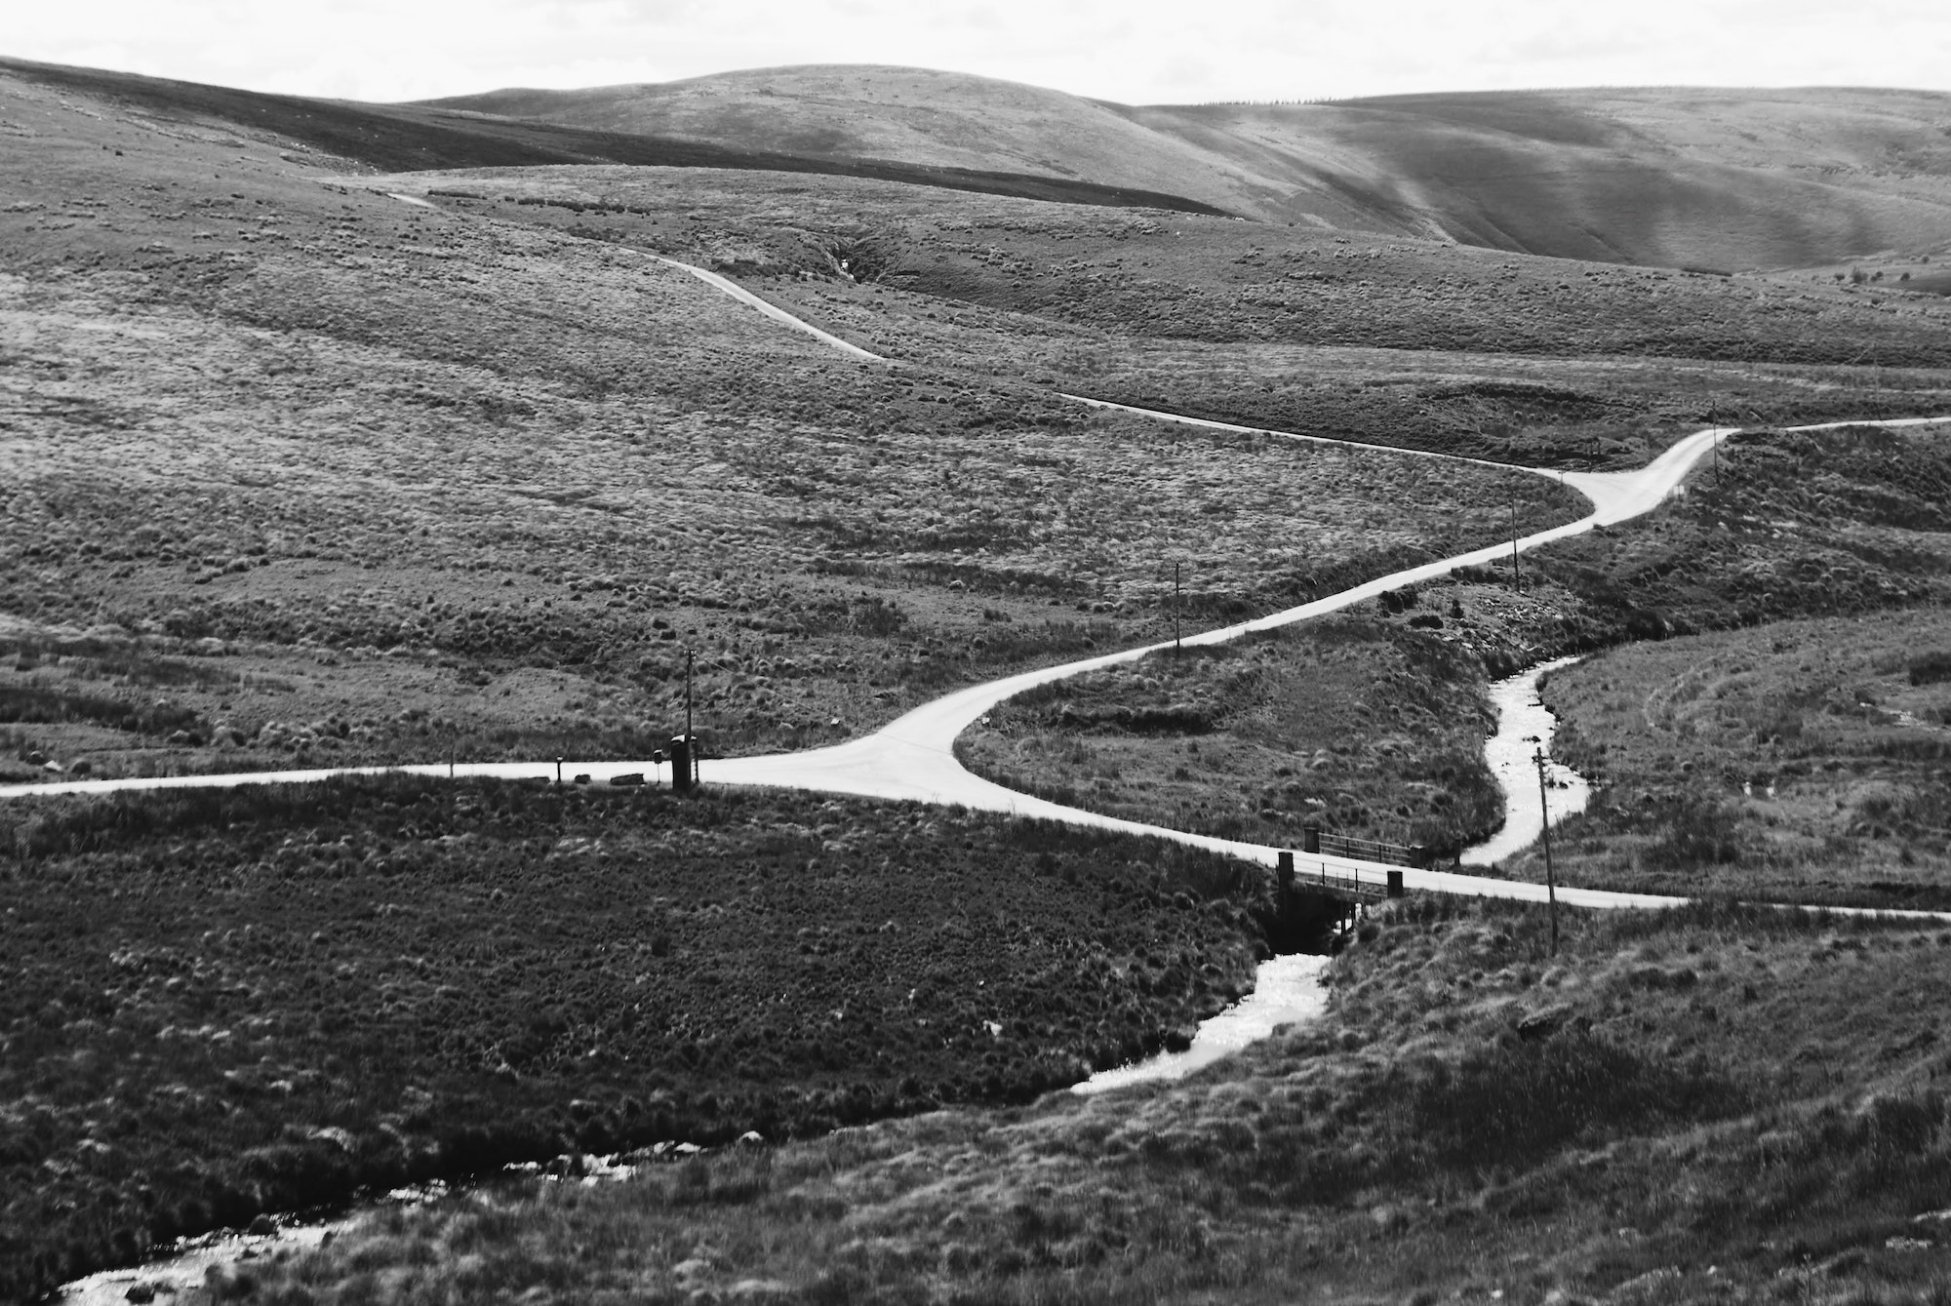 Photograph of paths through hills